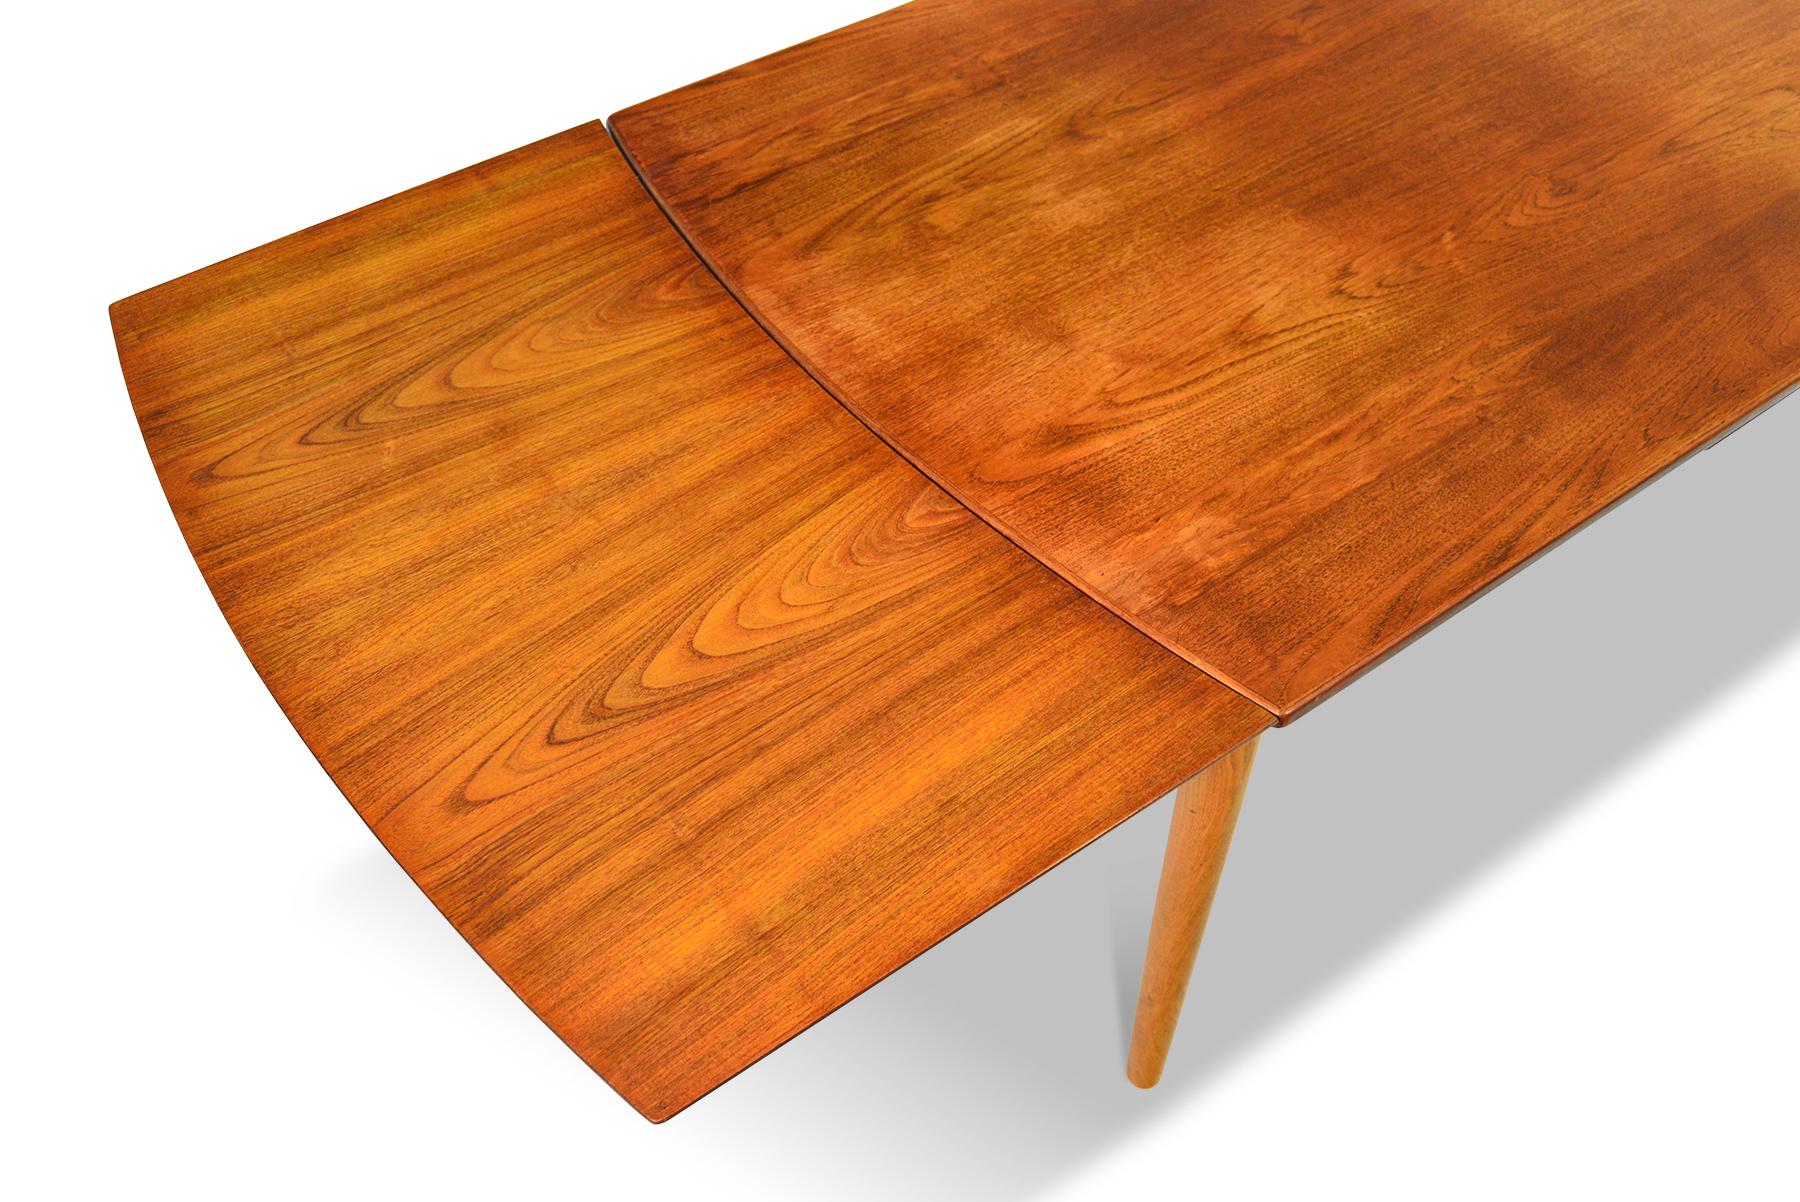 20th Century Danish Modern Bow Edge Draw Leaf Dining Table in Teak and Oak